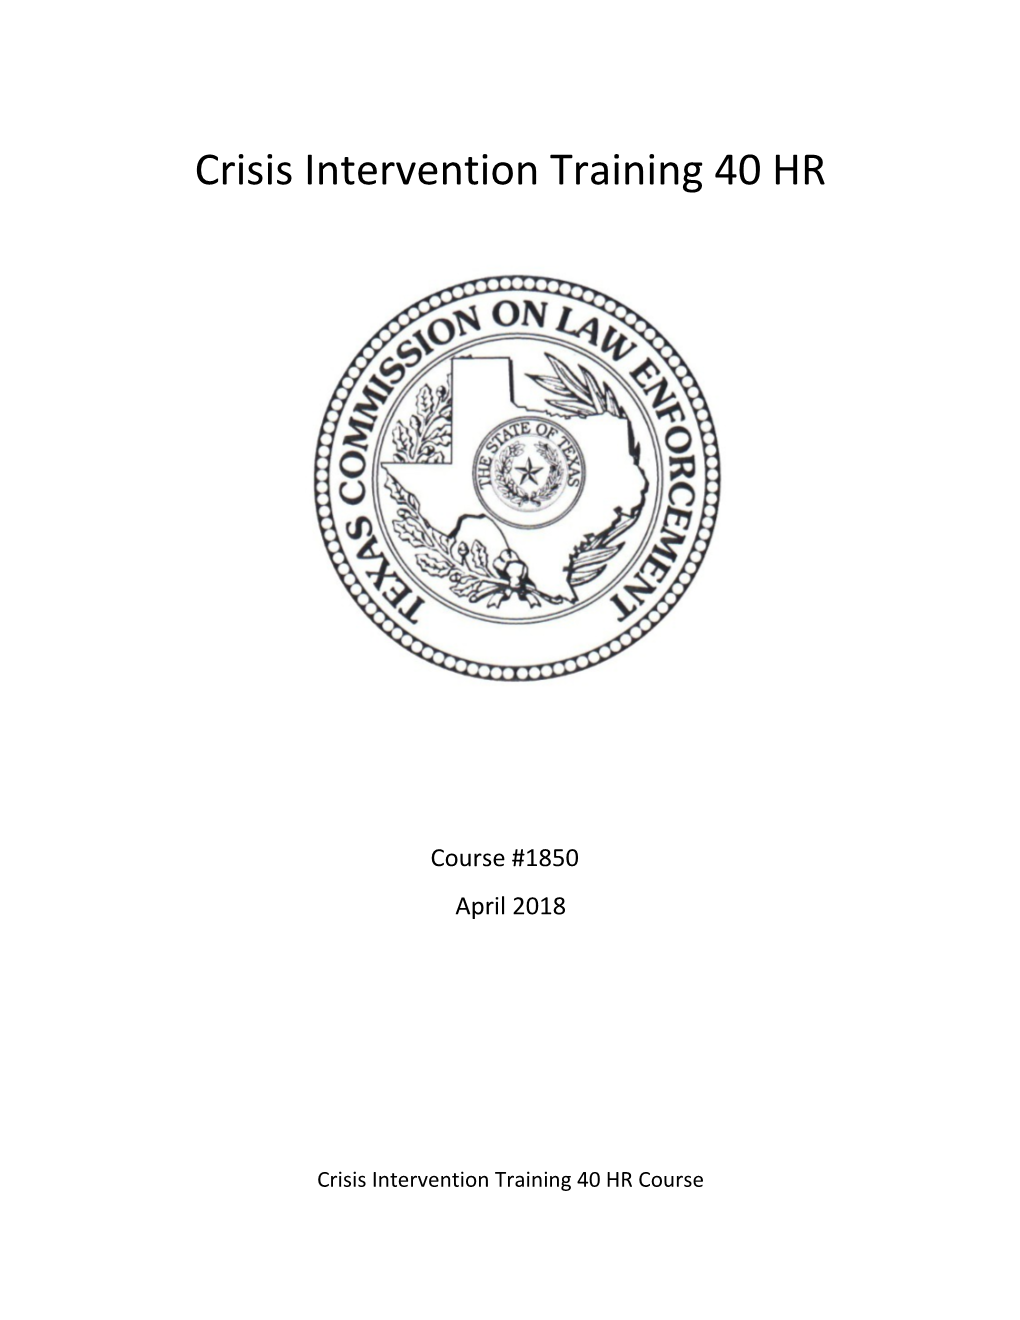 Crisis Intervention Training 40 HR Course